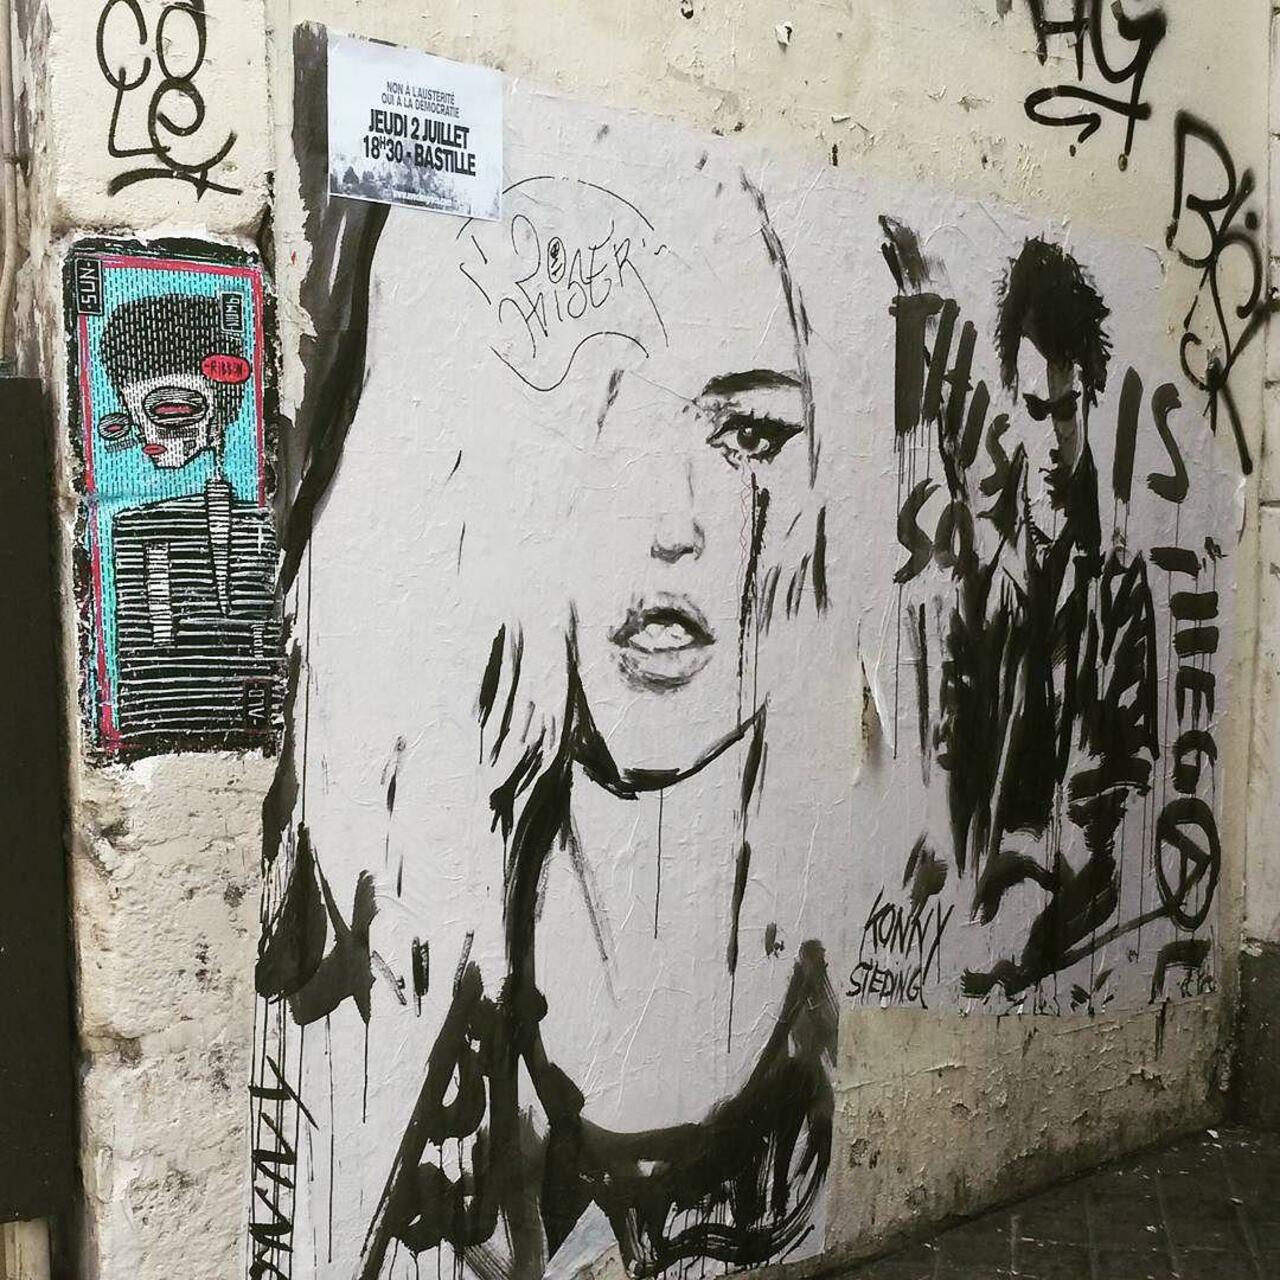 #Paris #graffiti photo by @le_cyclopede http://ift.tt/1KWqszu #StreetArt http://t.co/Qw9wXhRckR